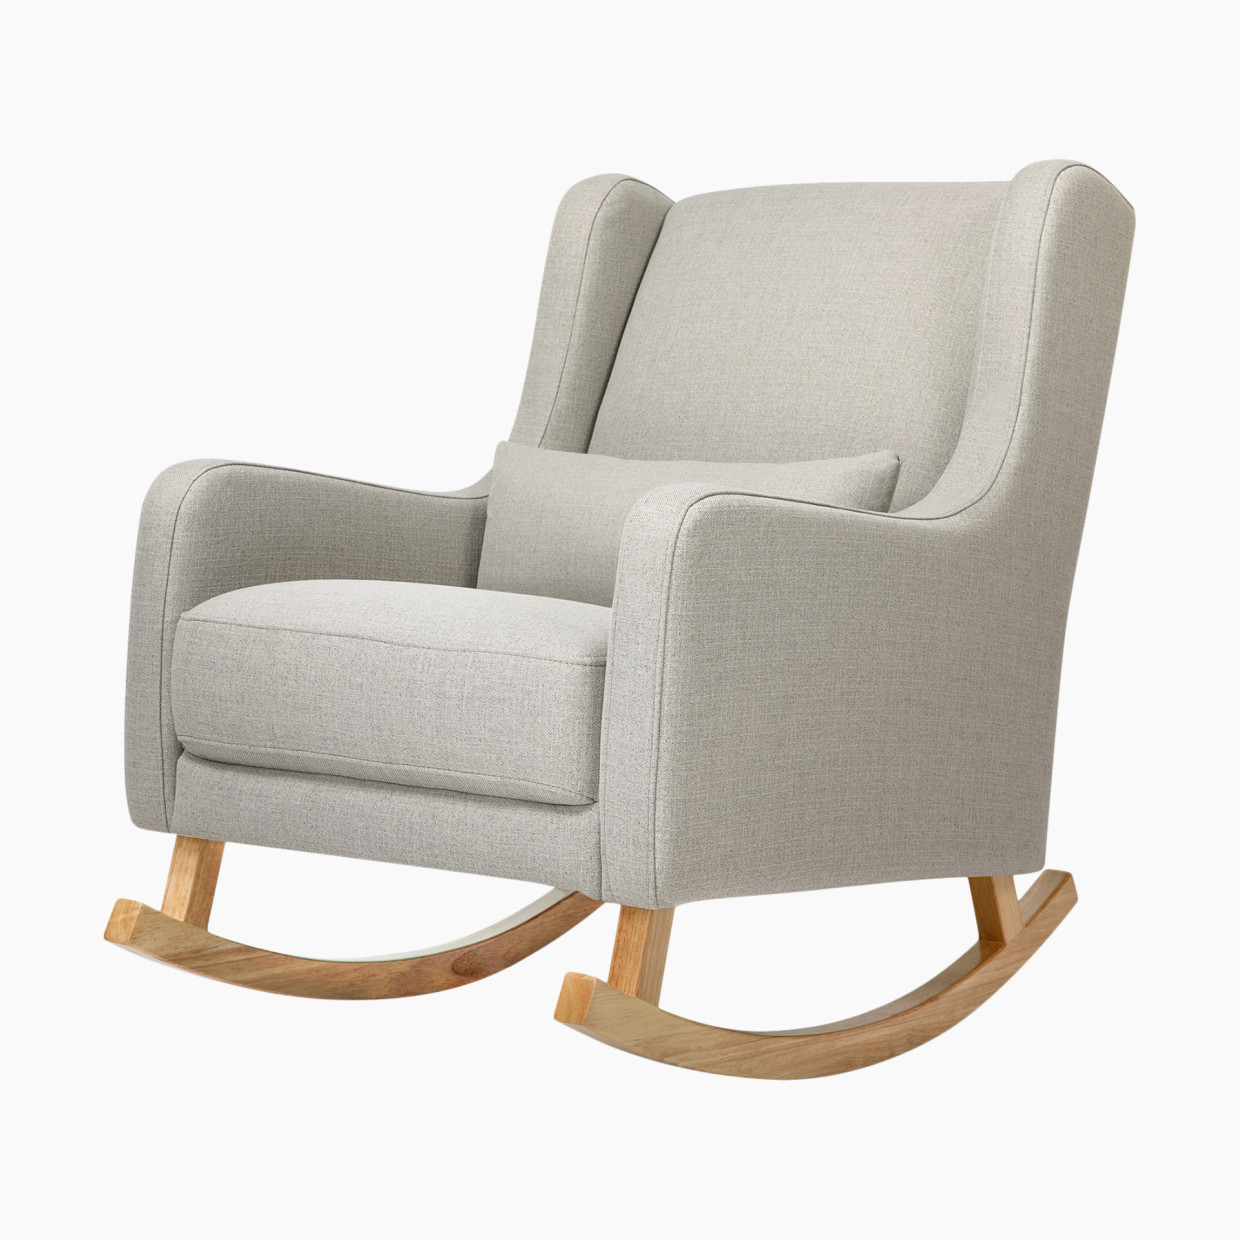 babyletto Kai Rocker Chair - Performance Grey Eco Twill/Light Legs.